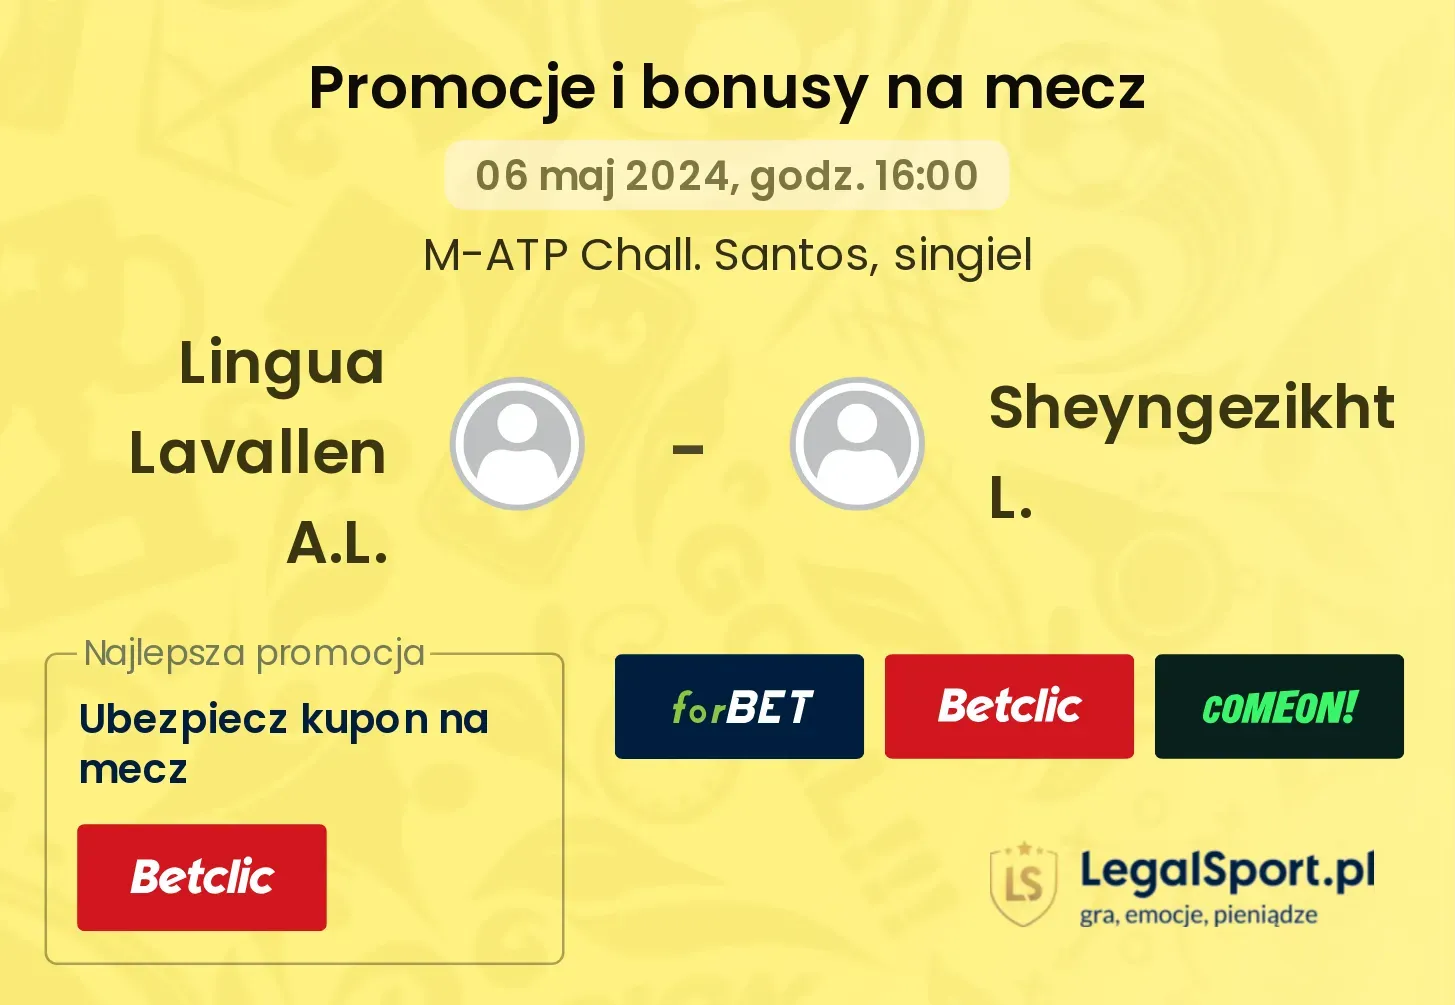 Lingua Lavallen A.L. - Sheyngezikht L. promocje bonusy na mecz